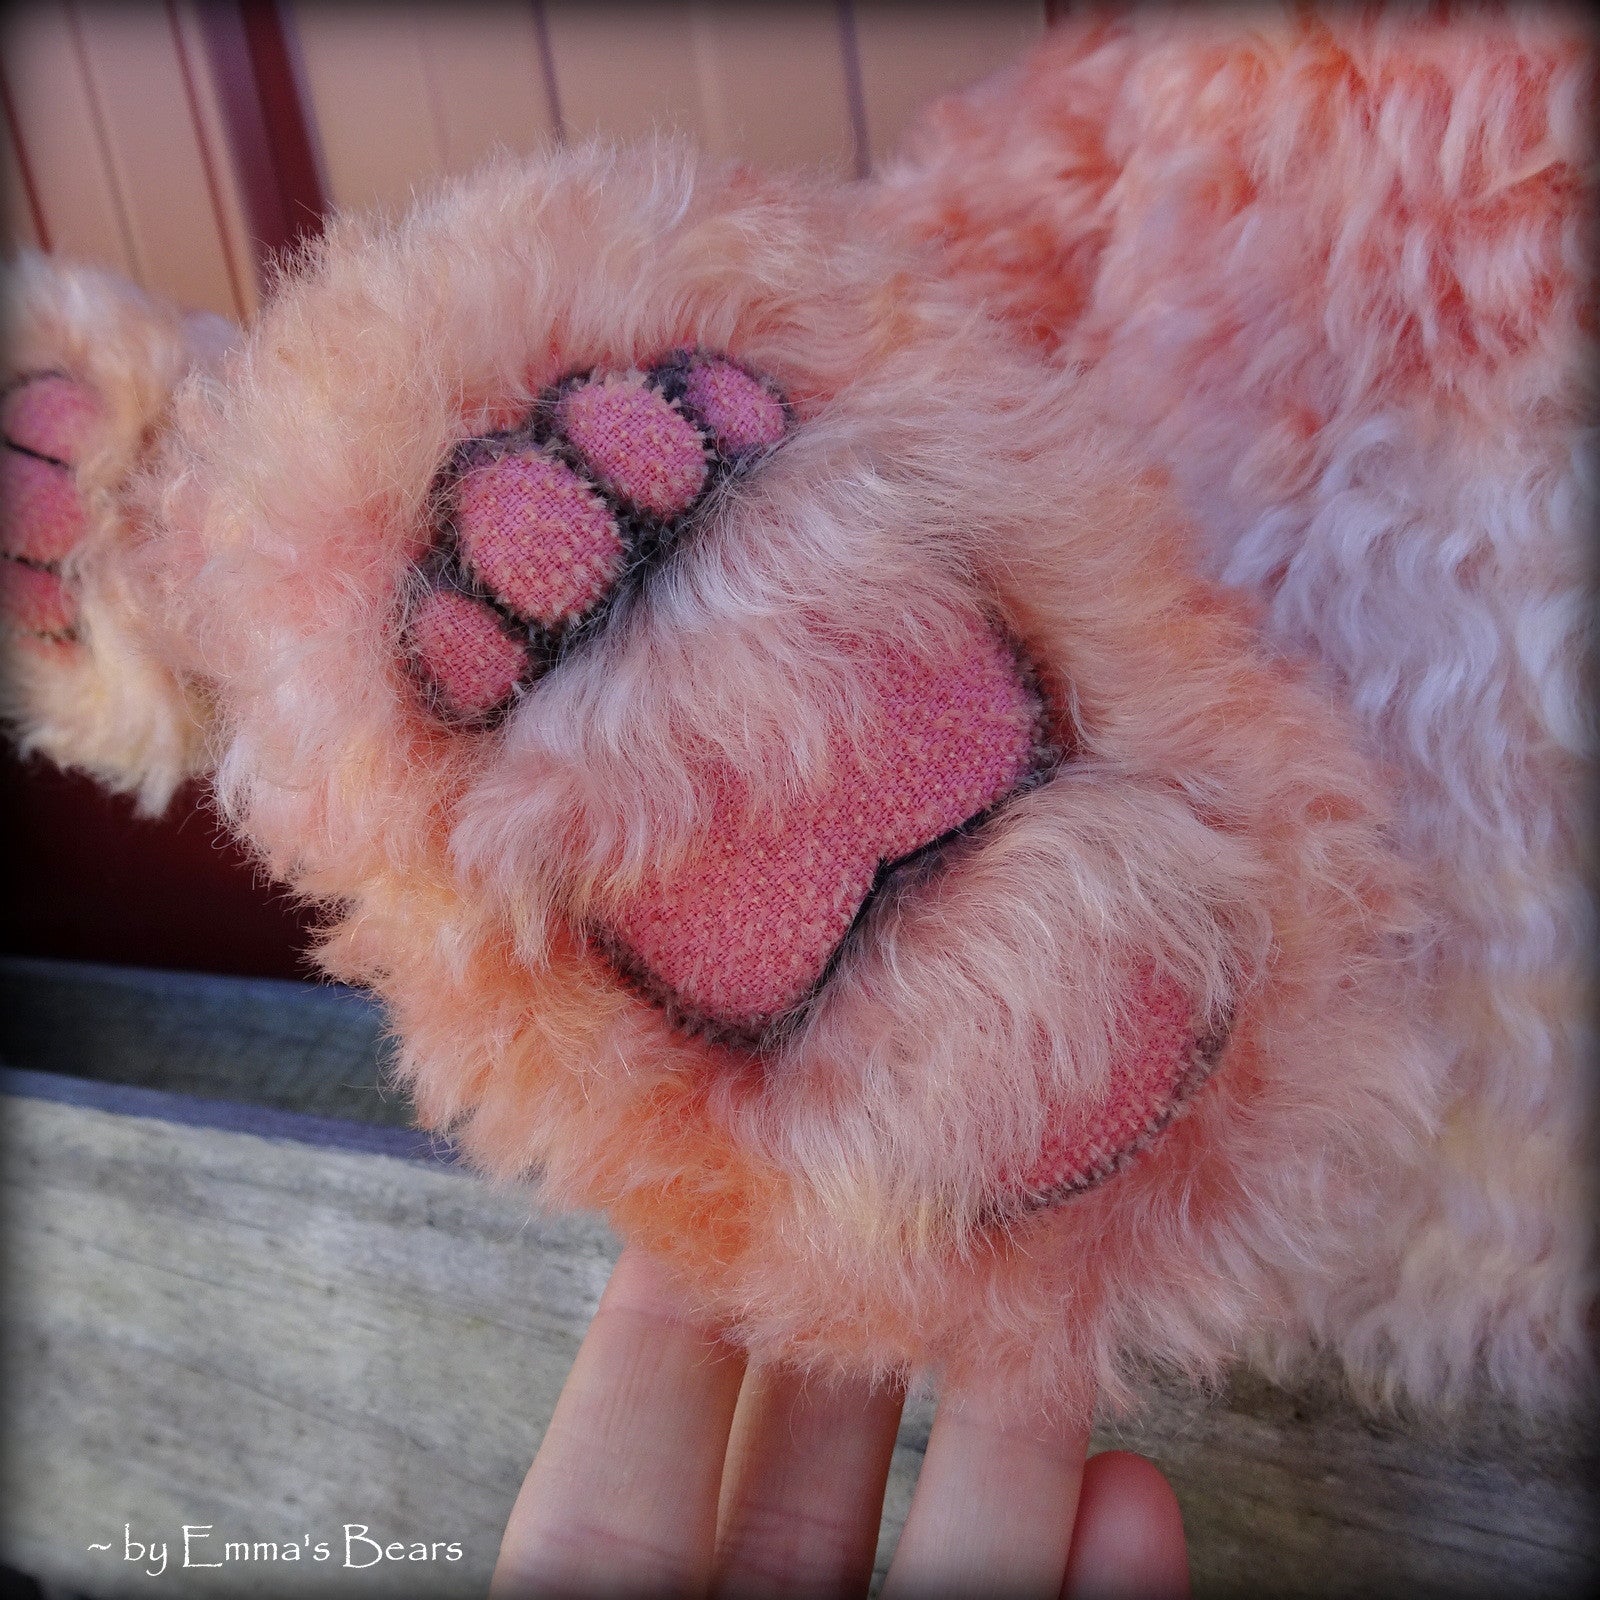 Toddler Lorelei Coral - 21in hand dyed MOHAIR Artist toddler style Panda Bear by Emmas Bears - OOAK